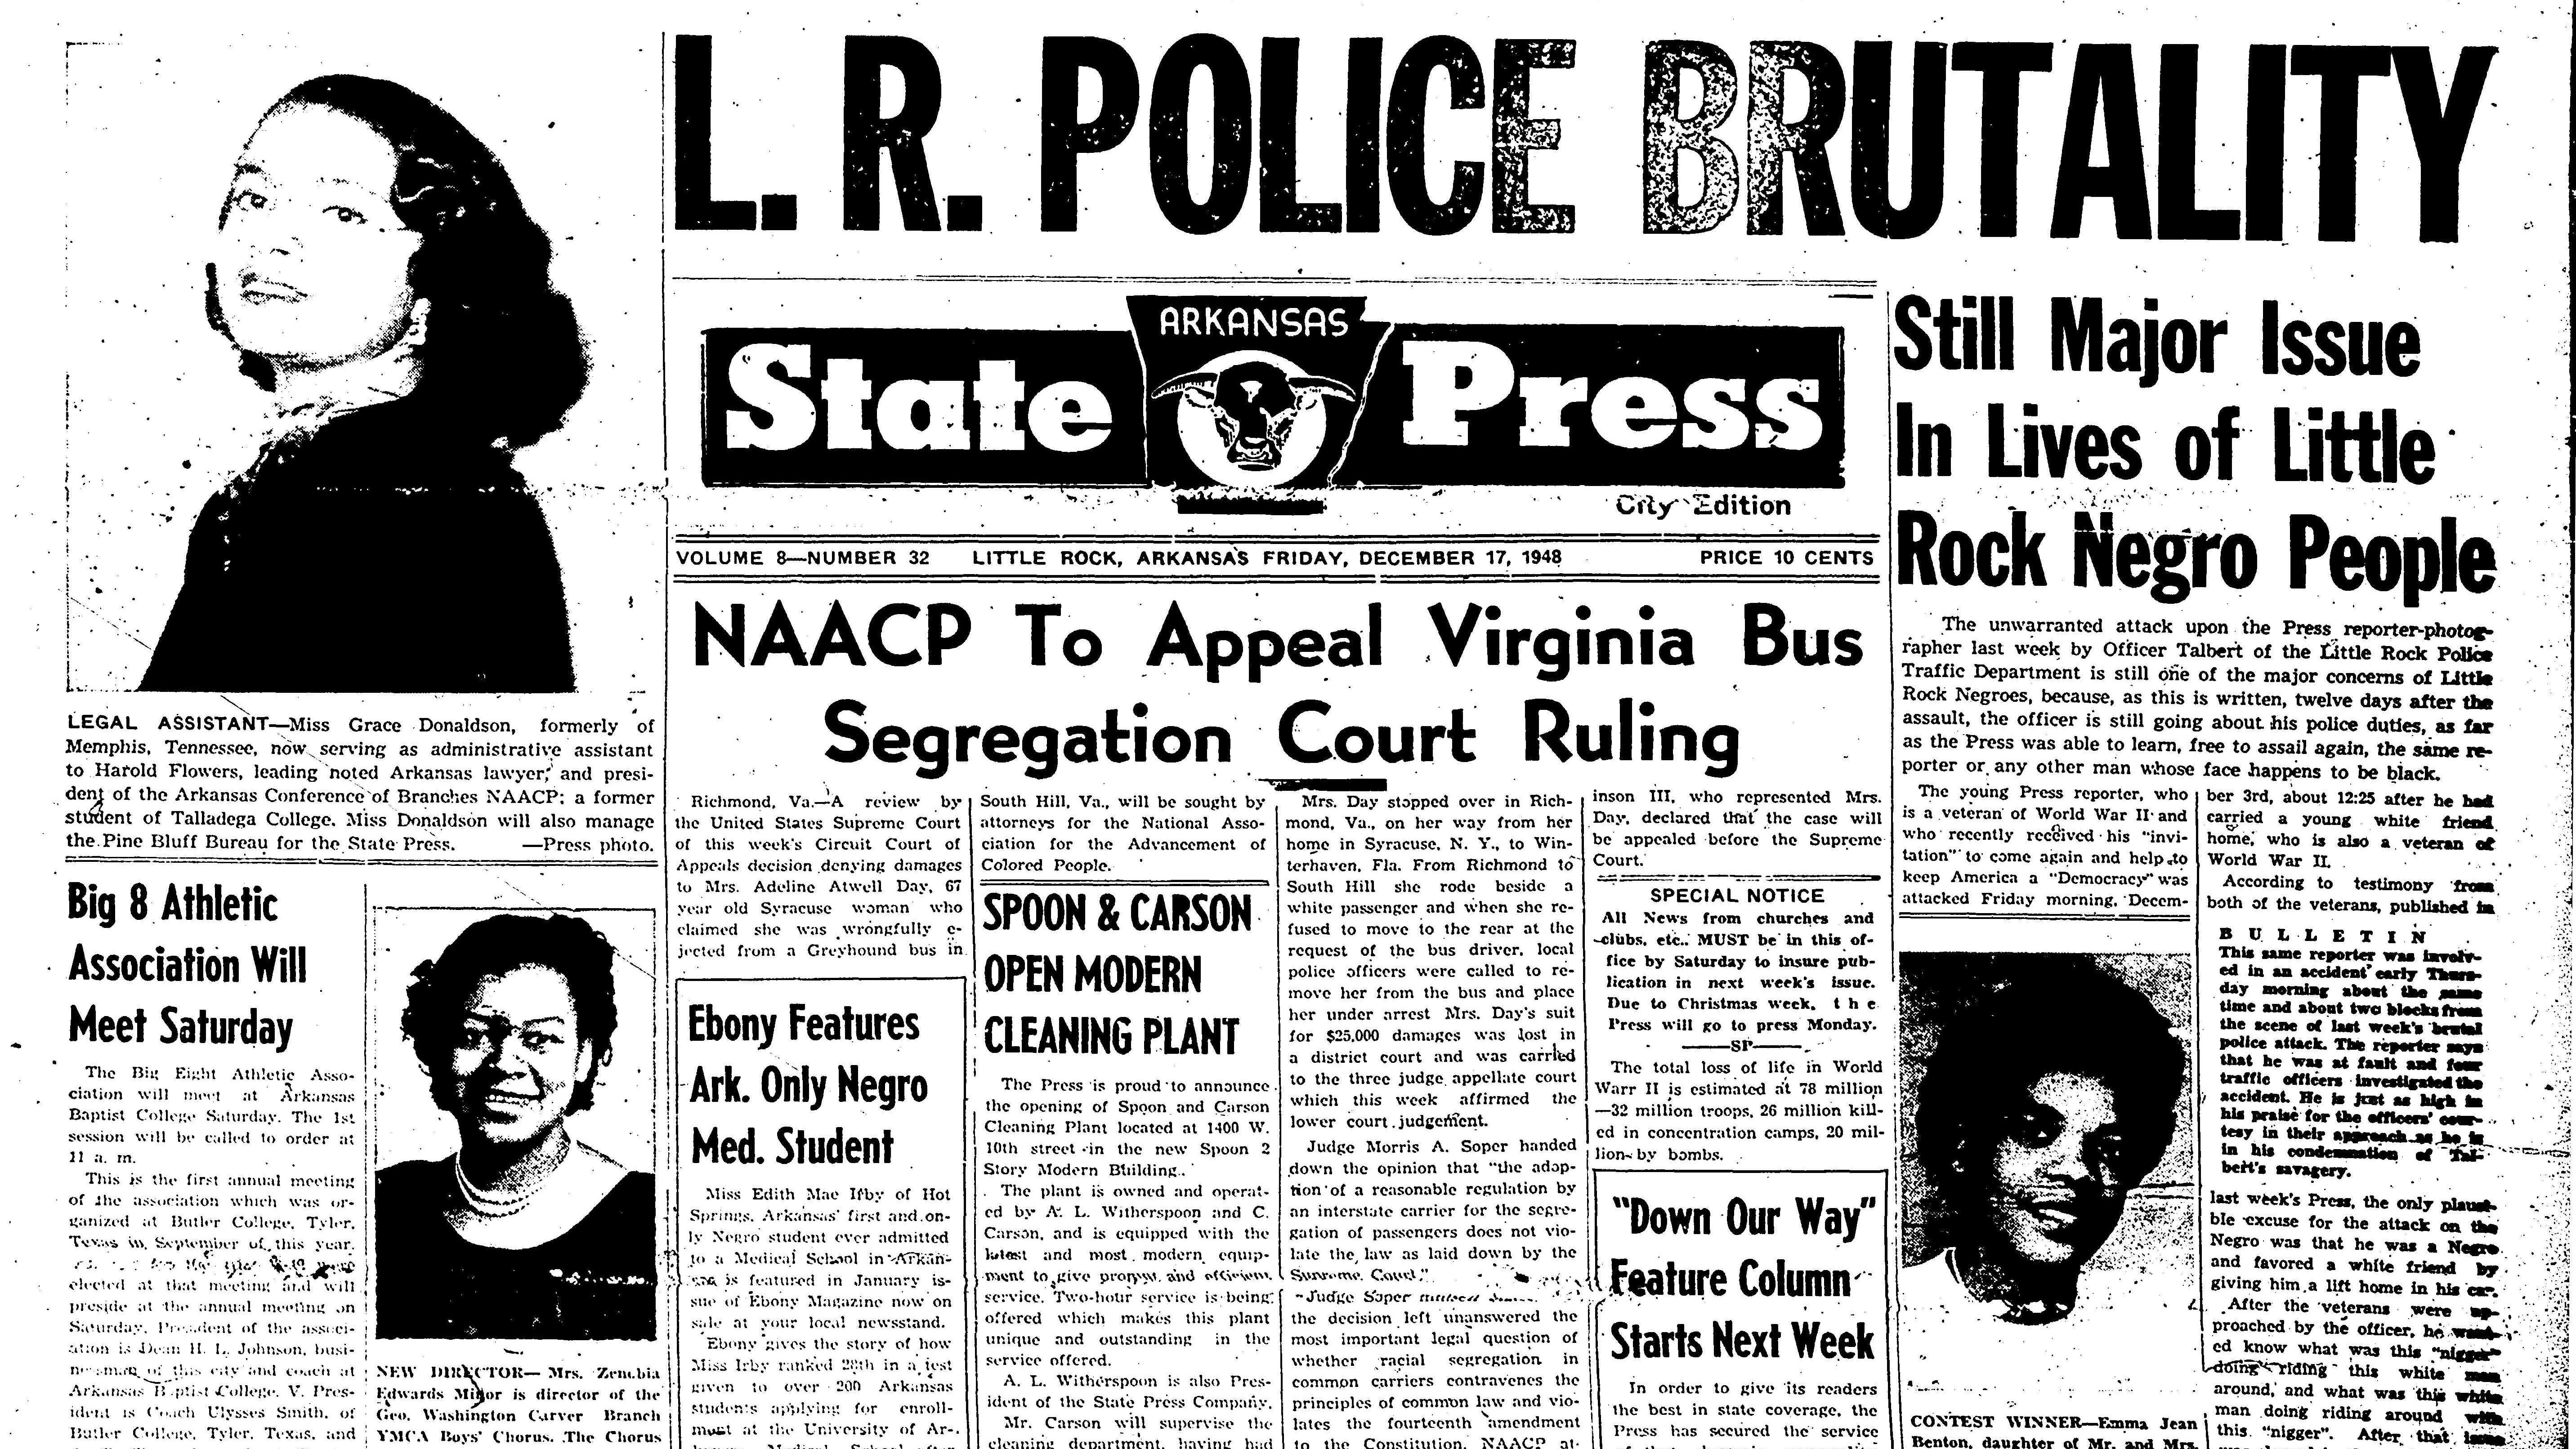 Arkansas State Press, 17. Dec. 1948